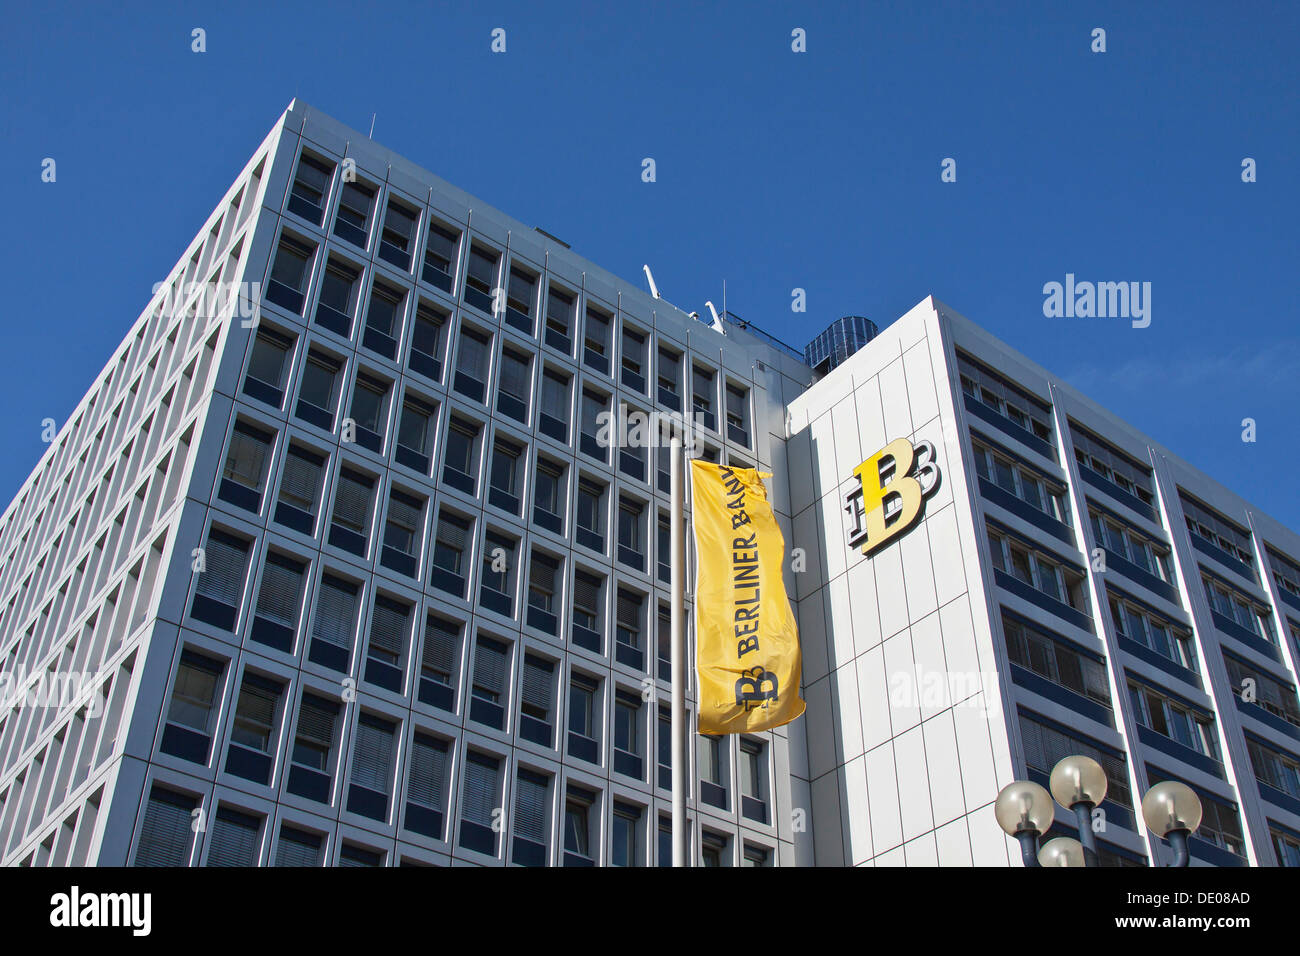 Berliner bank -Fotos und -Bildmaterial in hoher Auflösung – Alamy